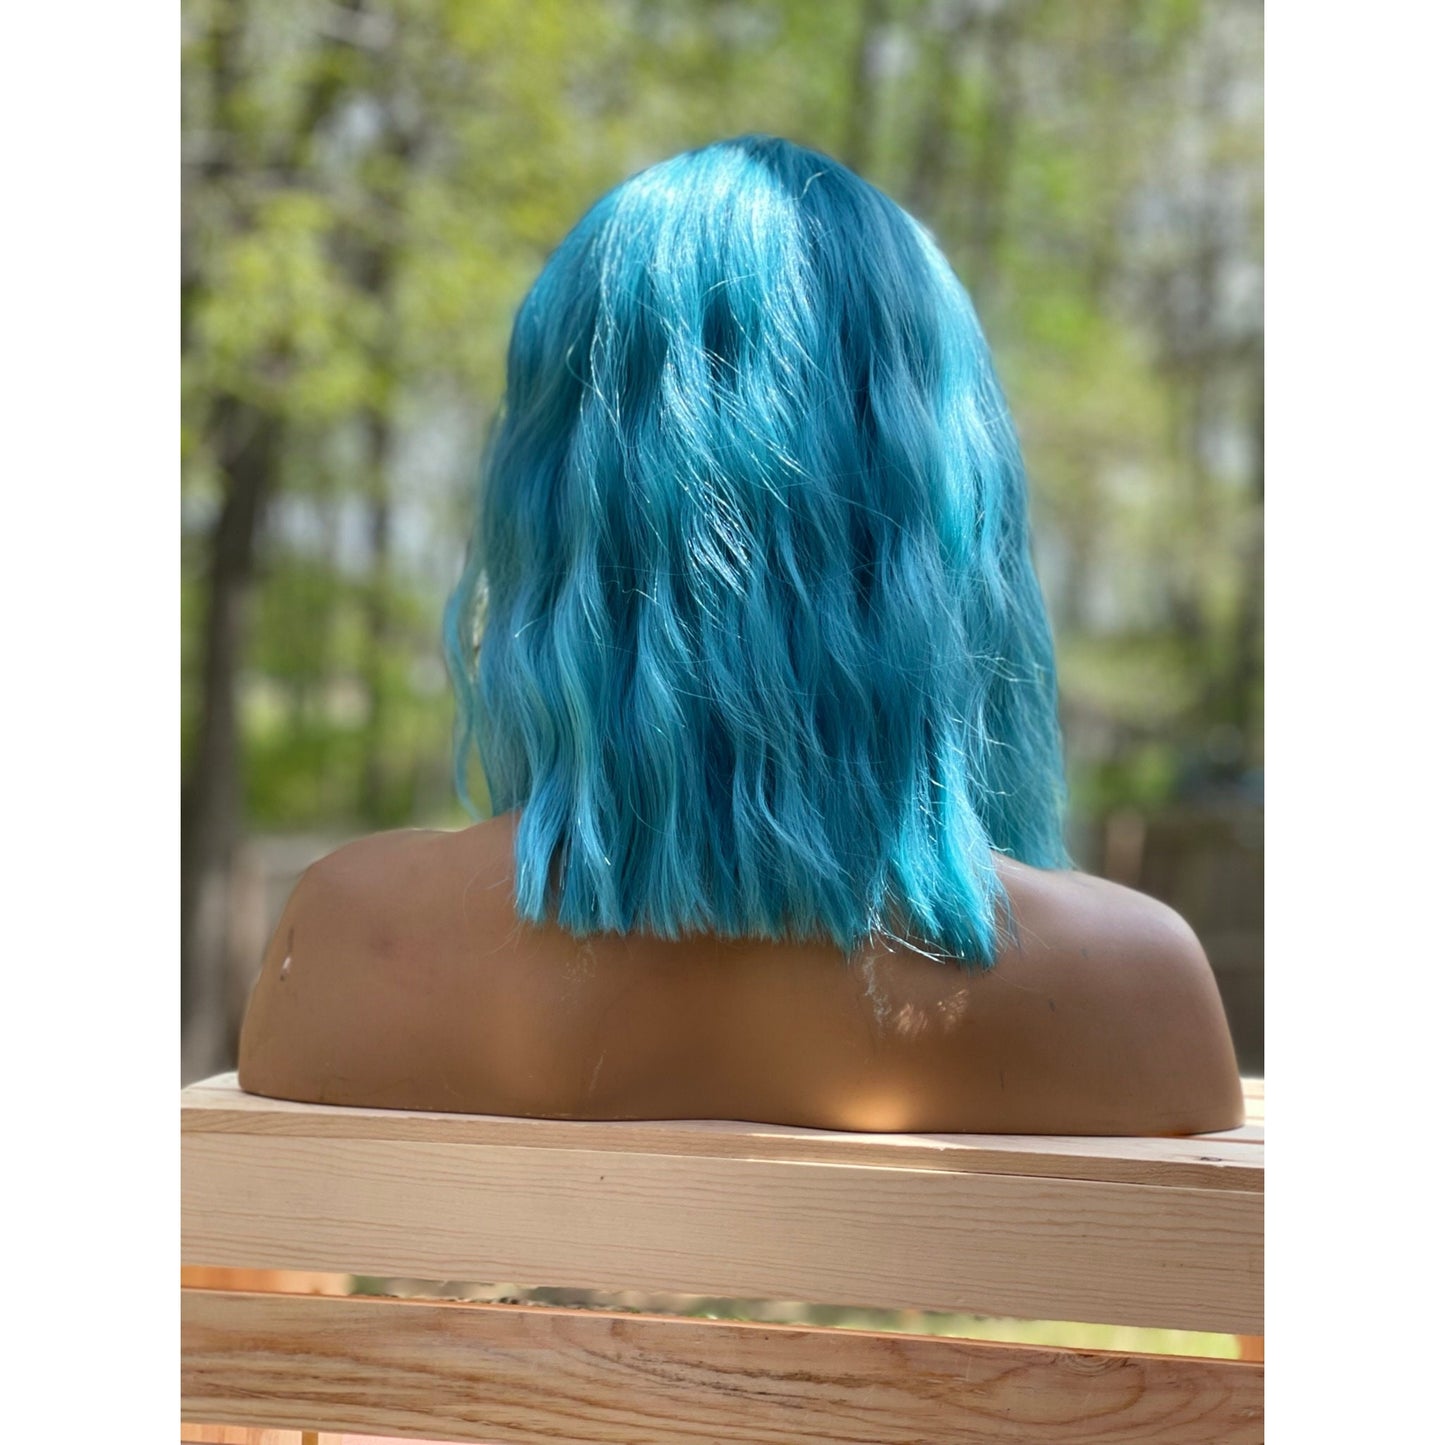 12” Blue short bob wavy human hair blend wig